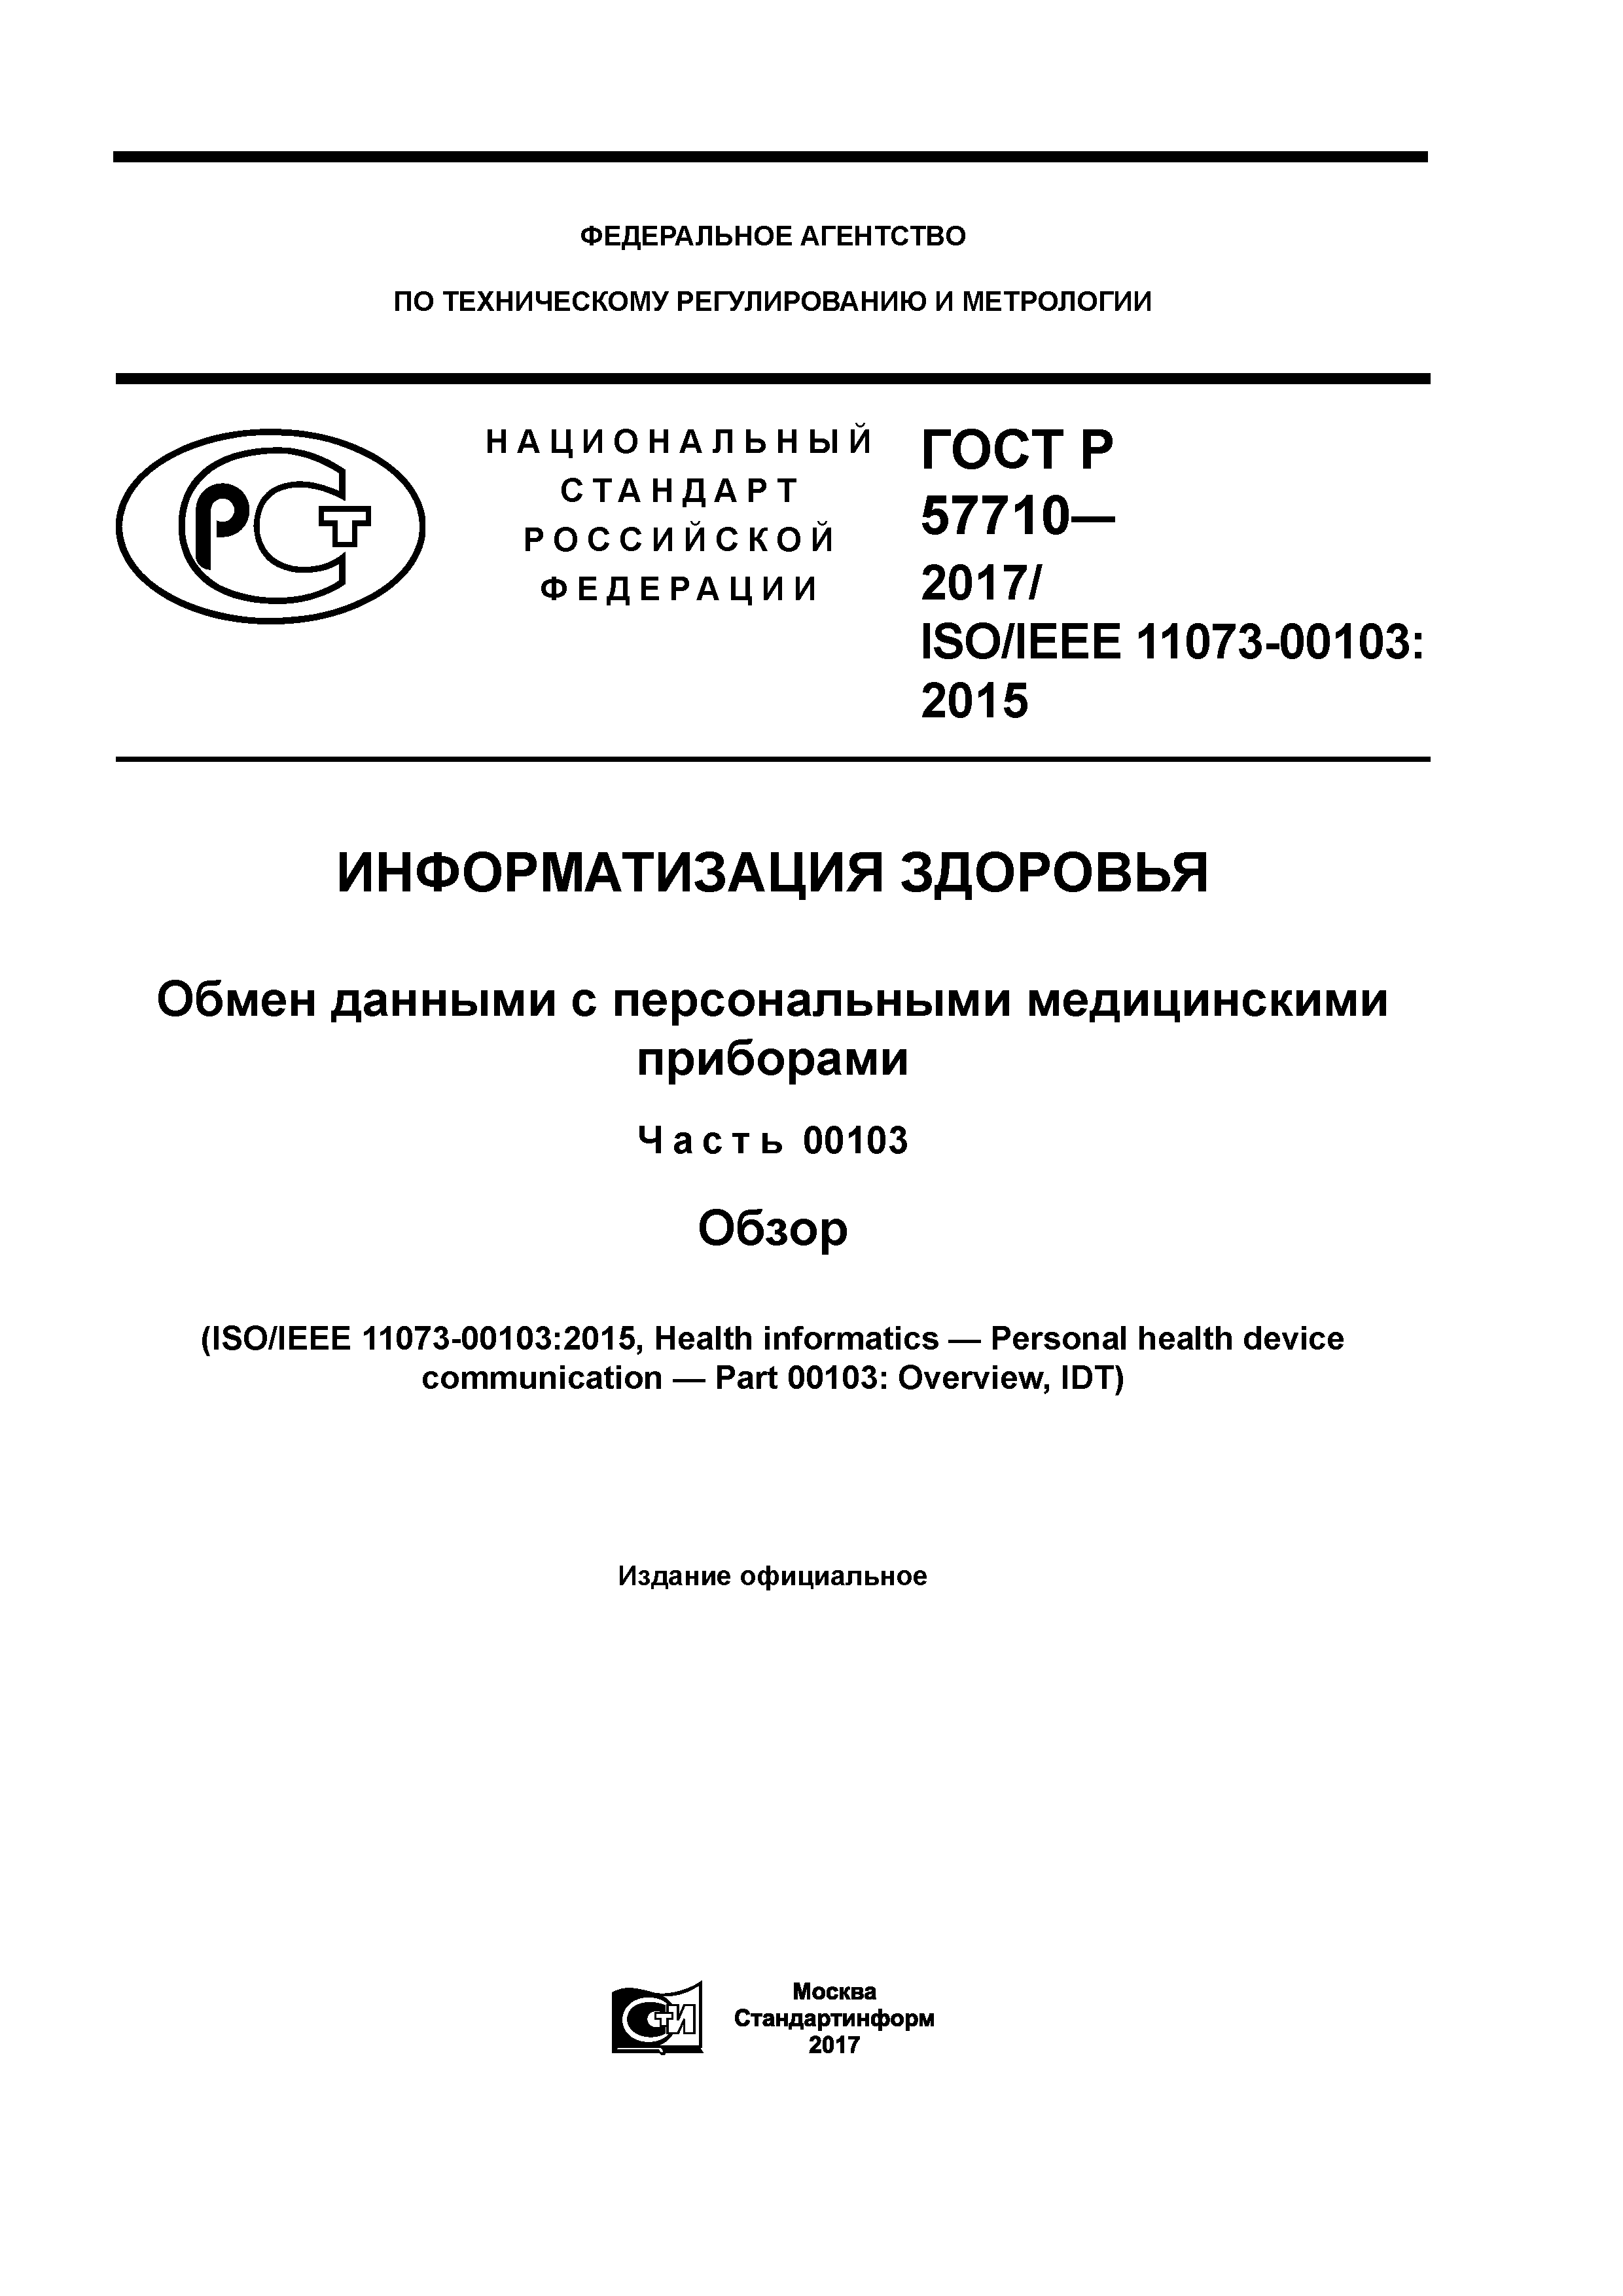 ГОСТ Р 57710-2017